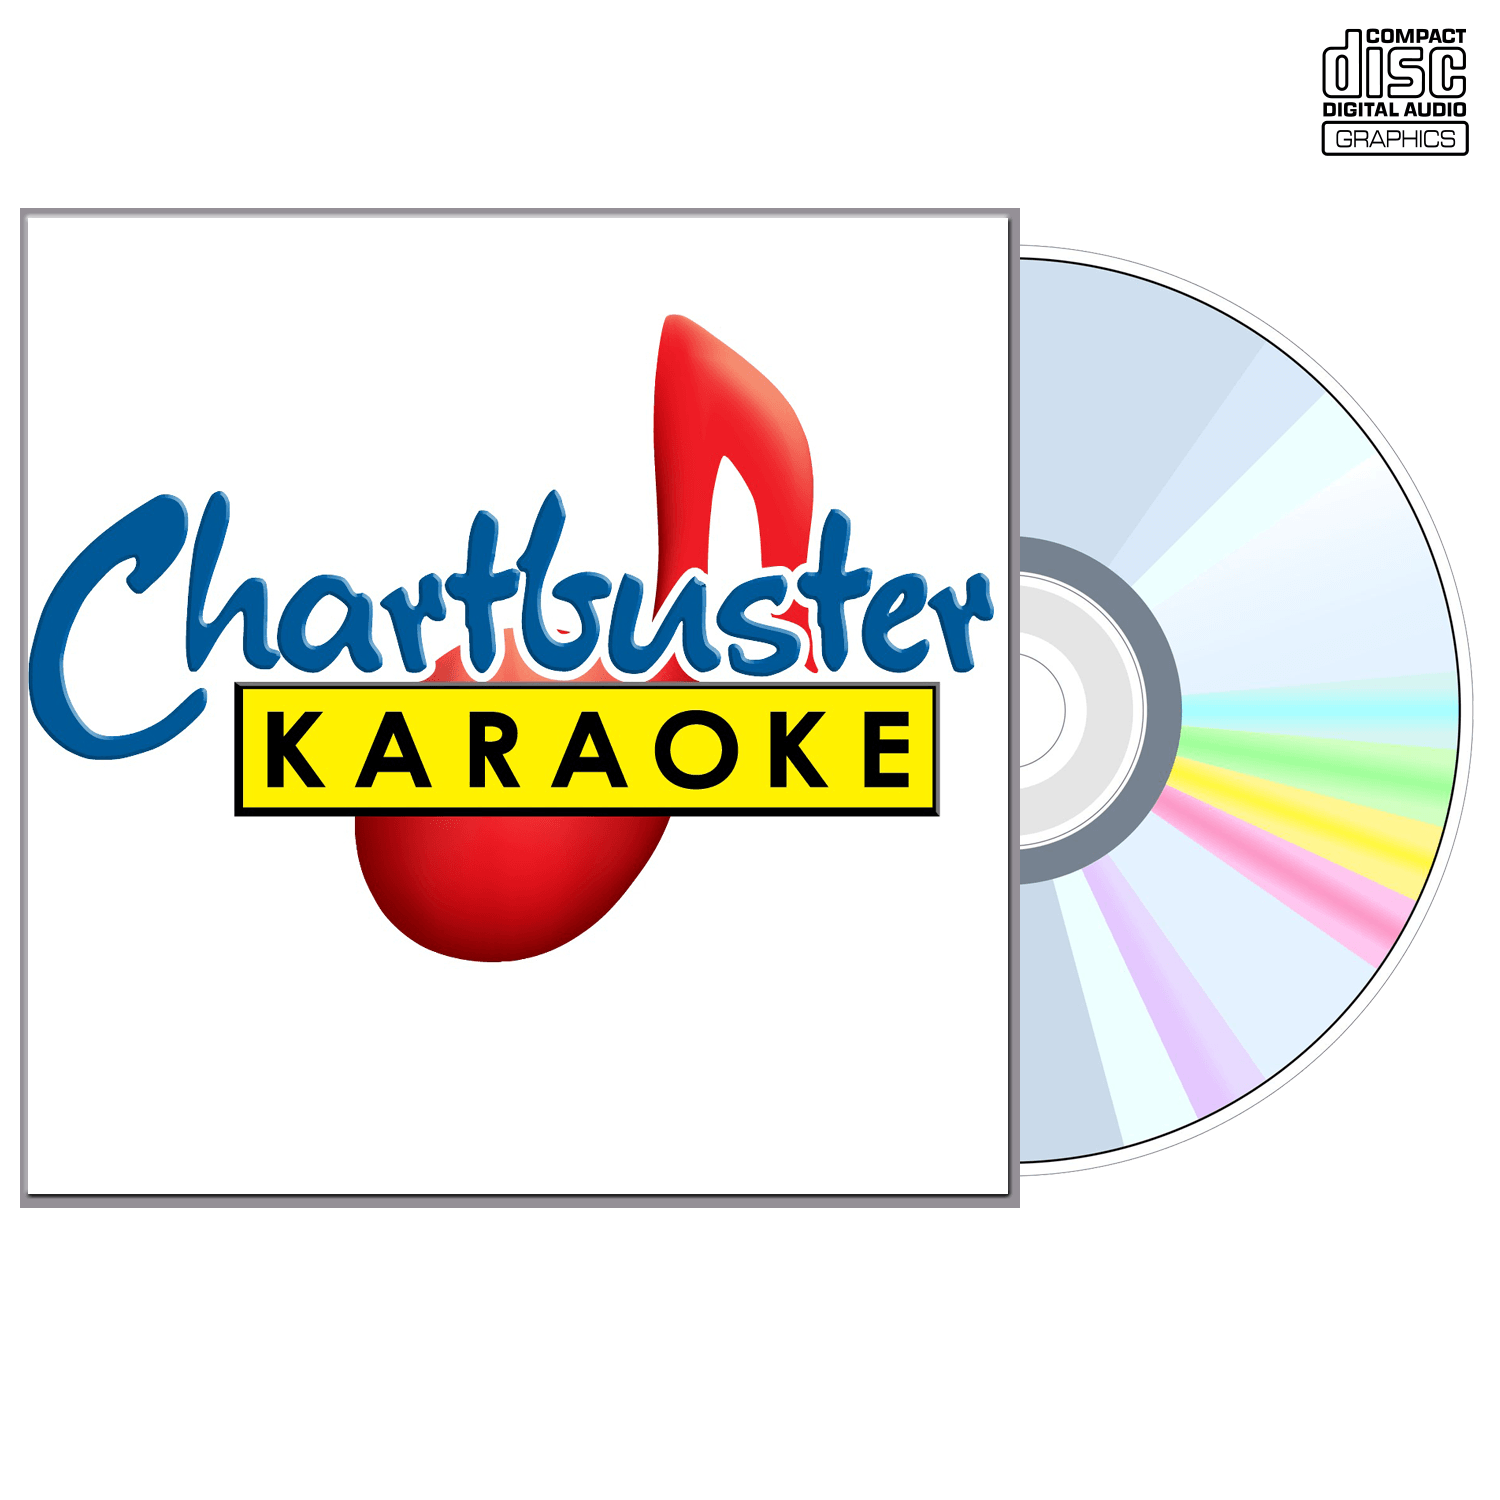 The Cranberries - CD+G - Chartbuster Karaoke - Karaoke Home Entertainment